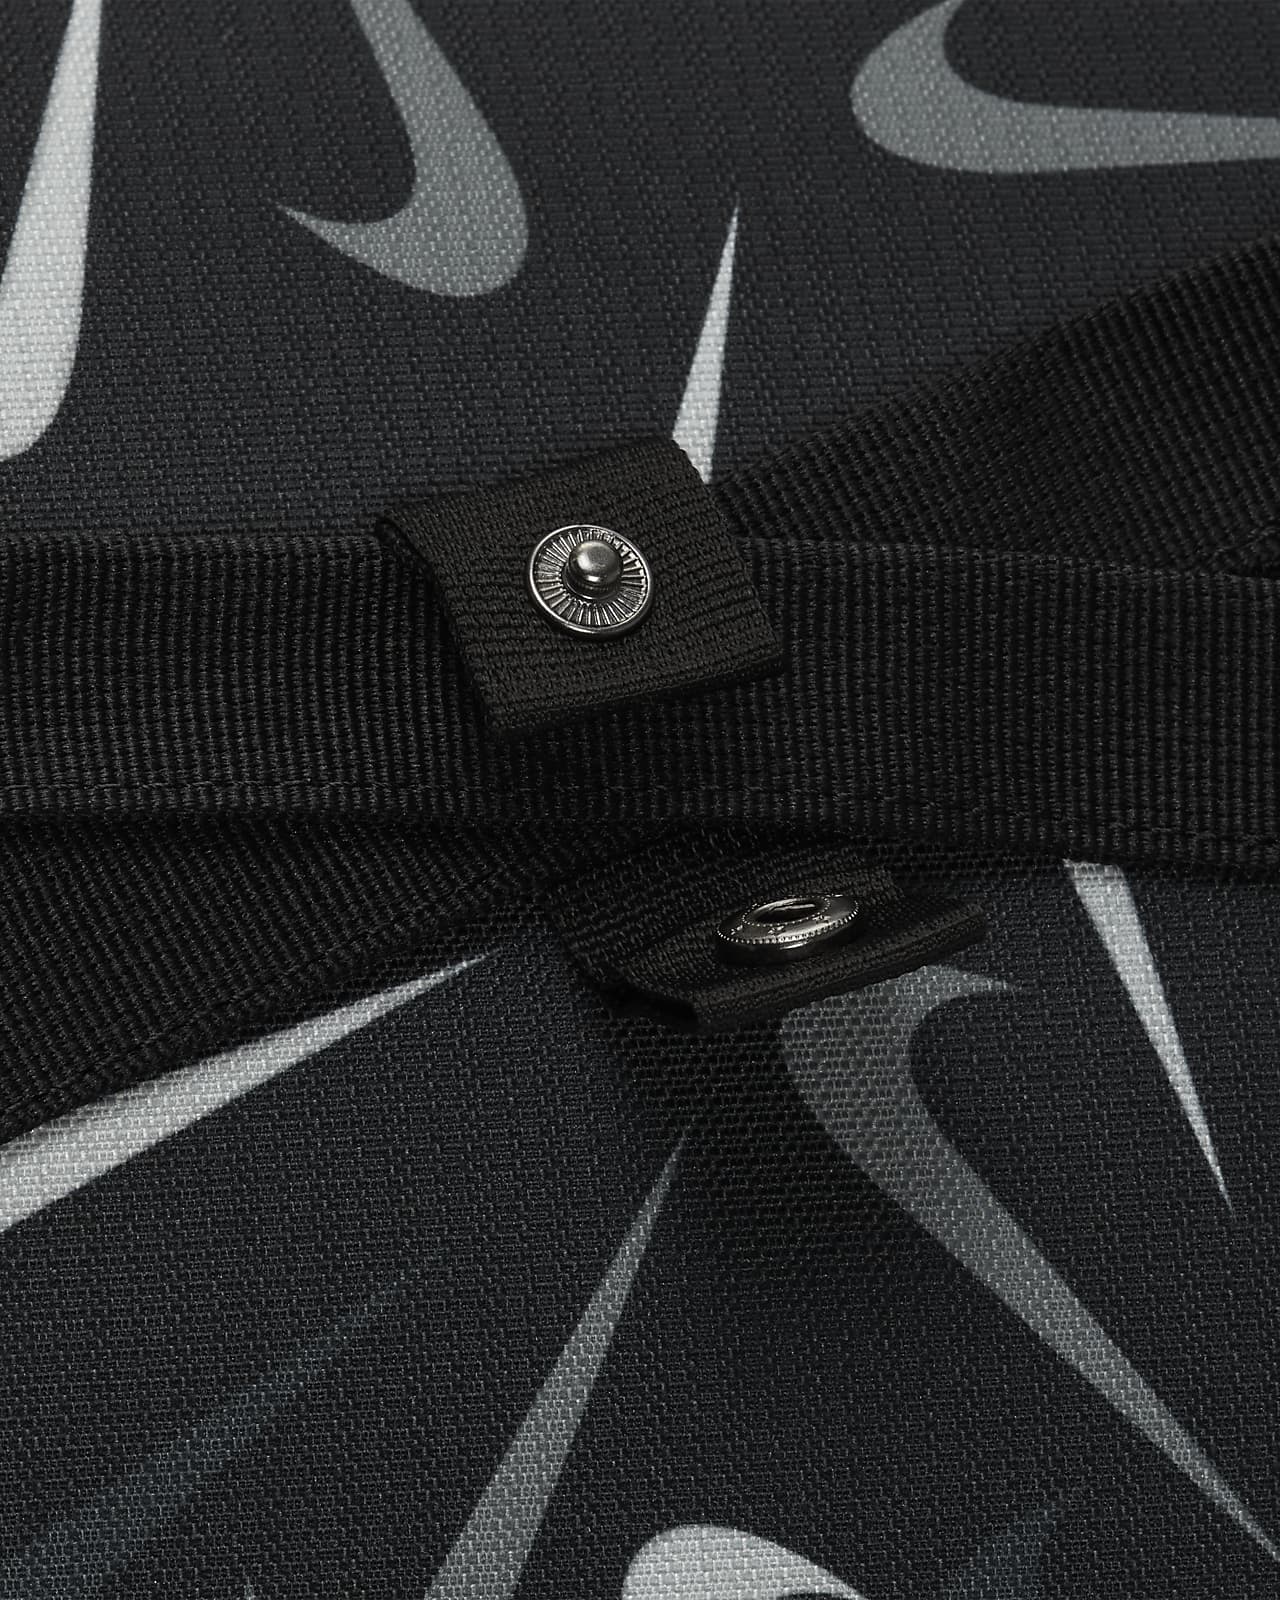 Buy Nike Brasilia 9.5 Training Duffel Bag (Small, 41L) Online